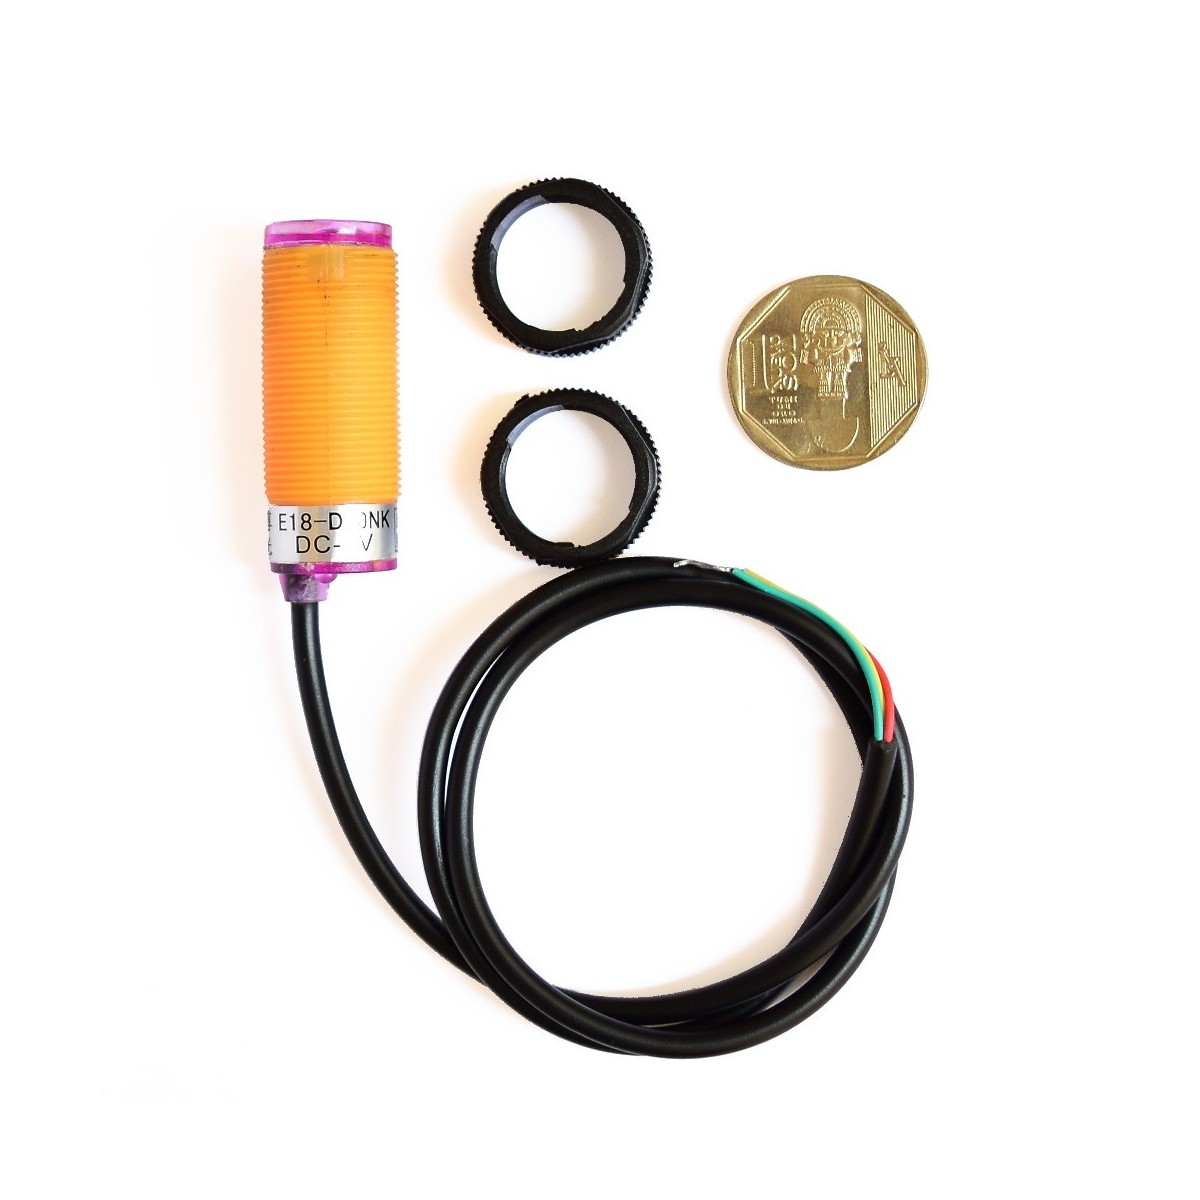 Interruptores de sensor de detección fotoeléctrica infrarroja E18-B03P 